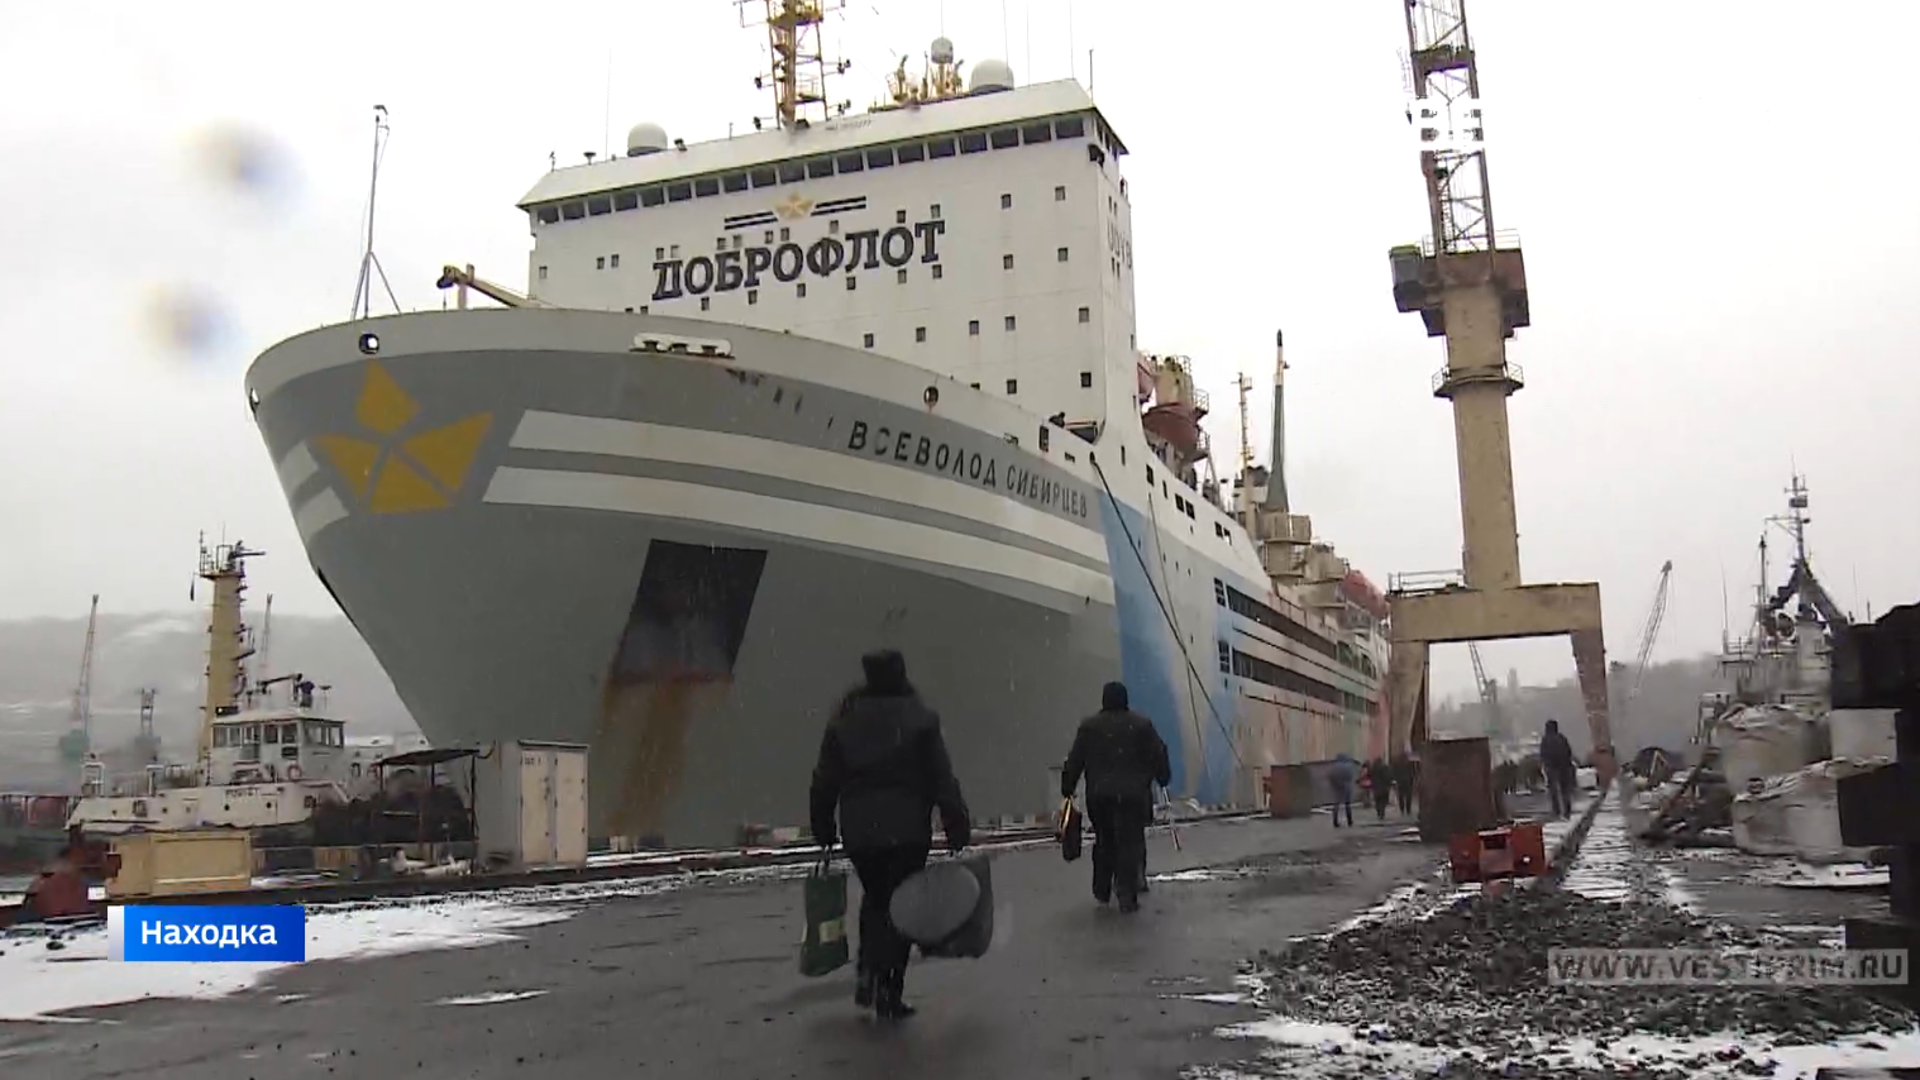 Vsevolod Sibirtsev 浮动工厂从创纪录的航行季节返回